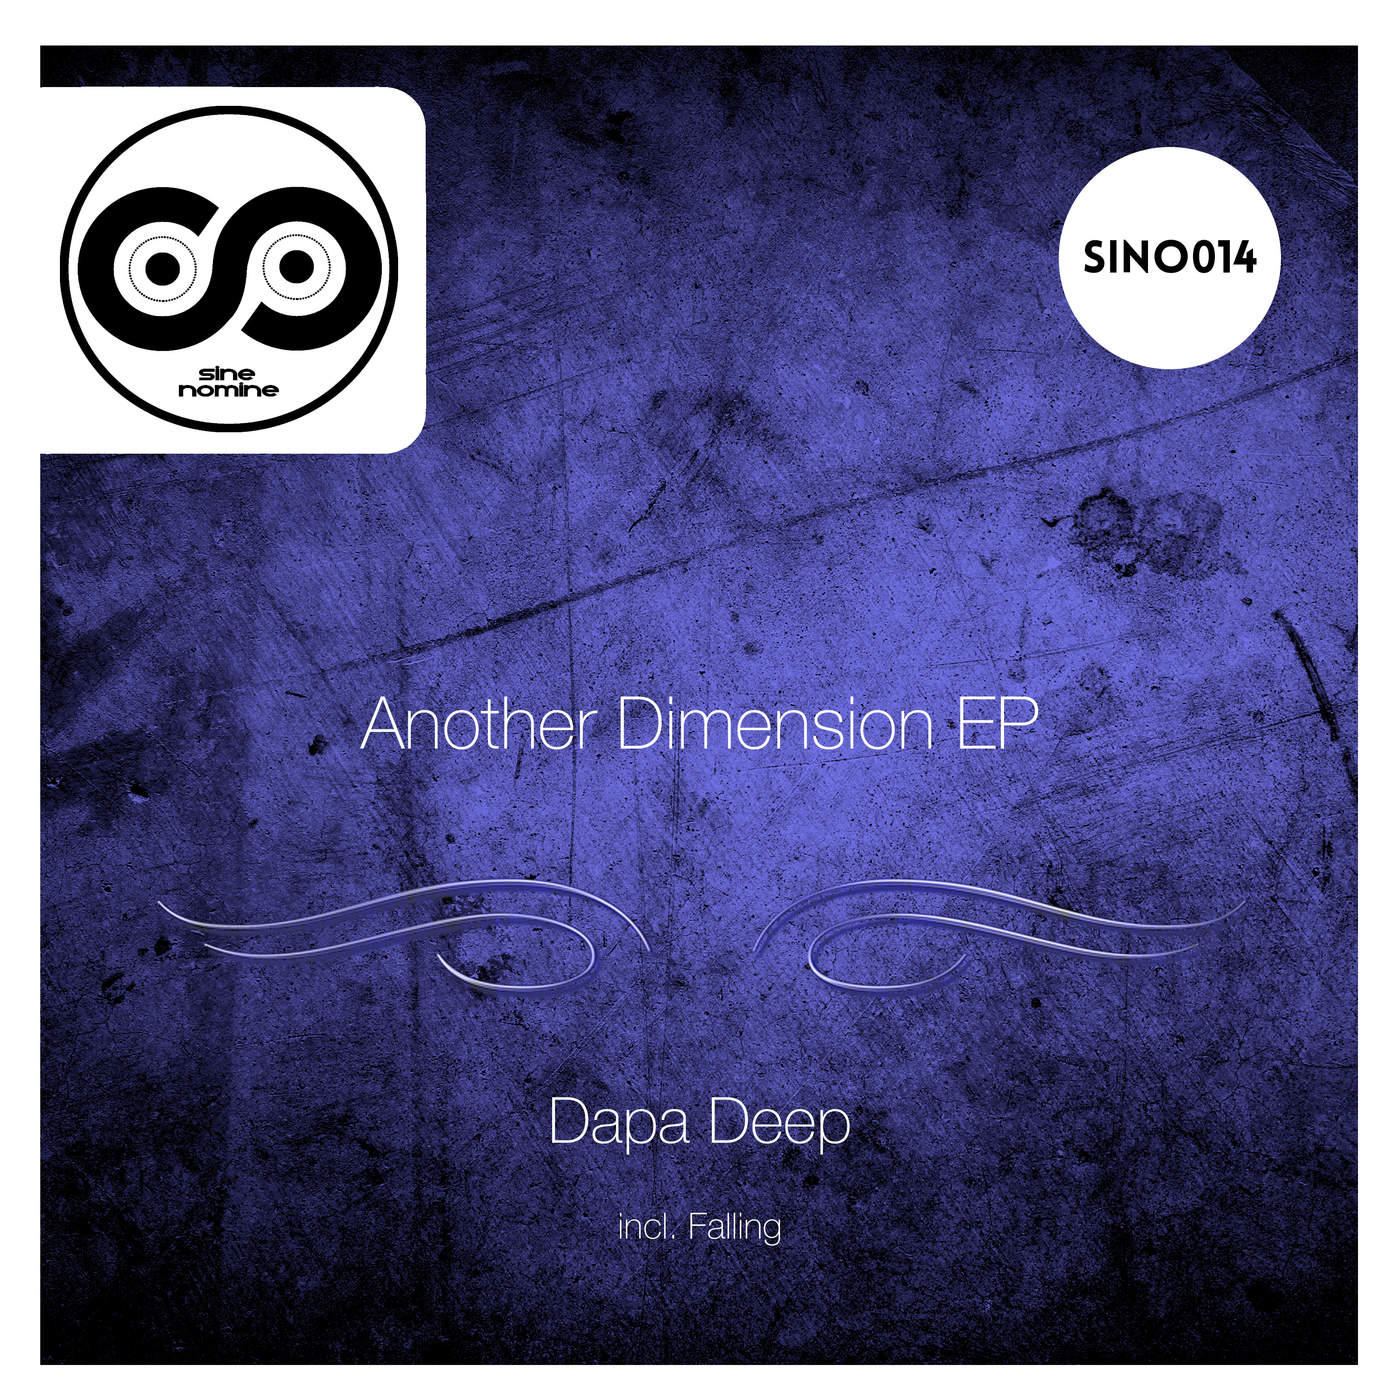 Dapa Deep – Falling (extended Mix) on Revolution Radio